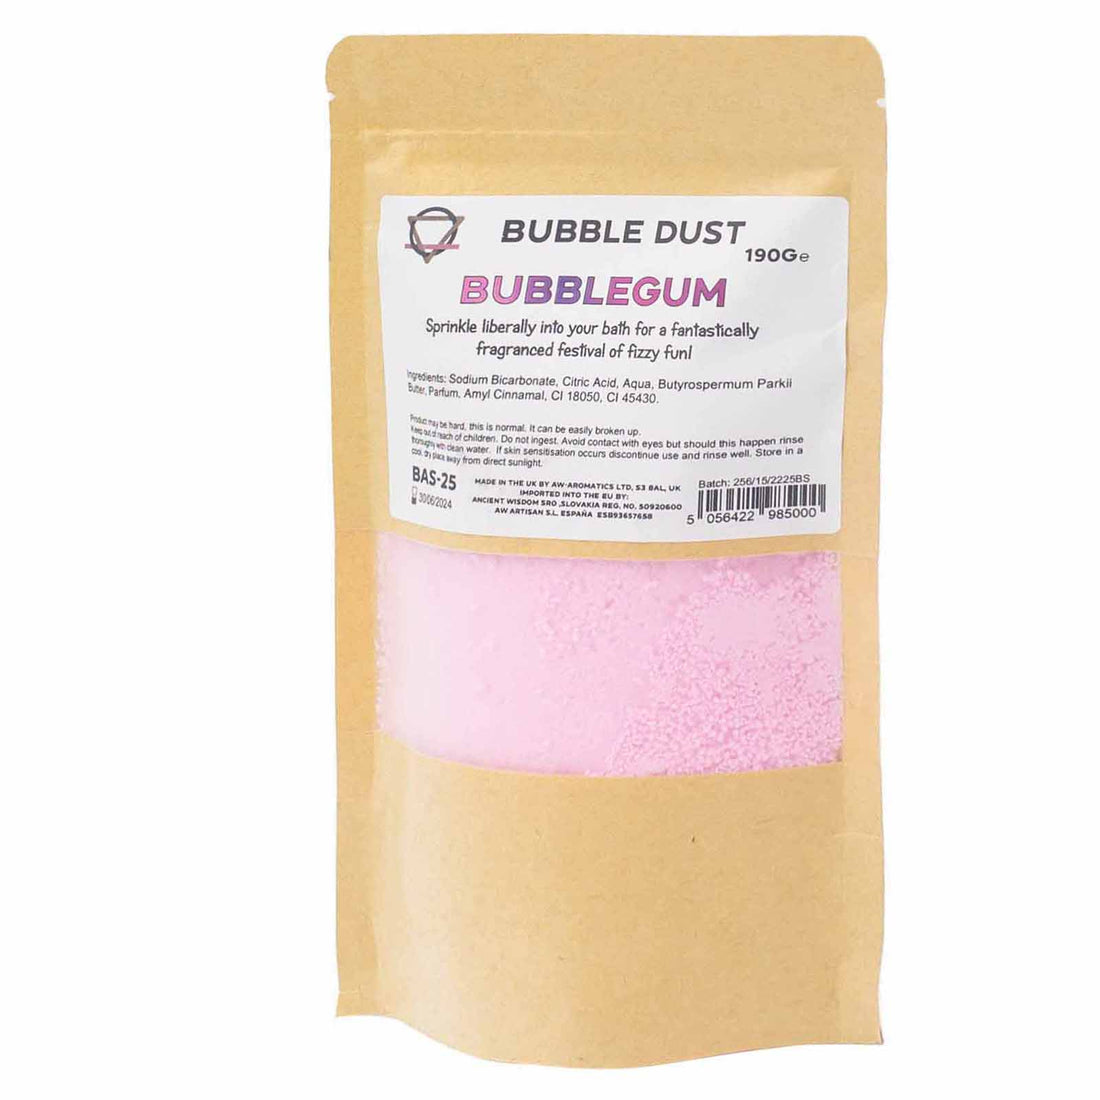 Bubblegum Bath Dust